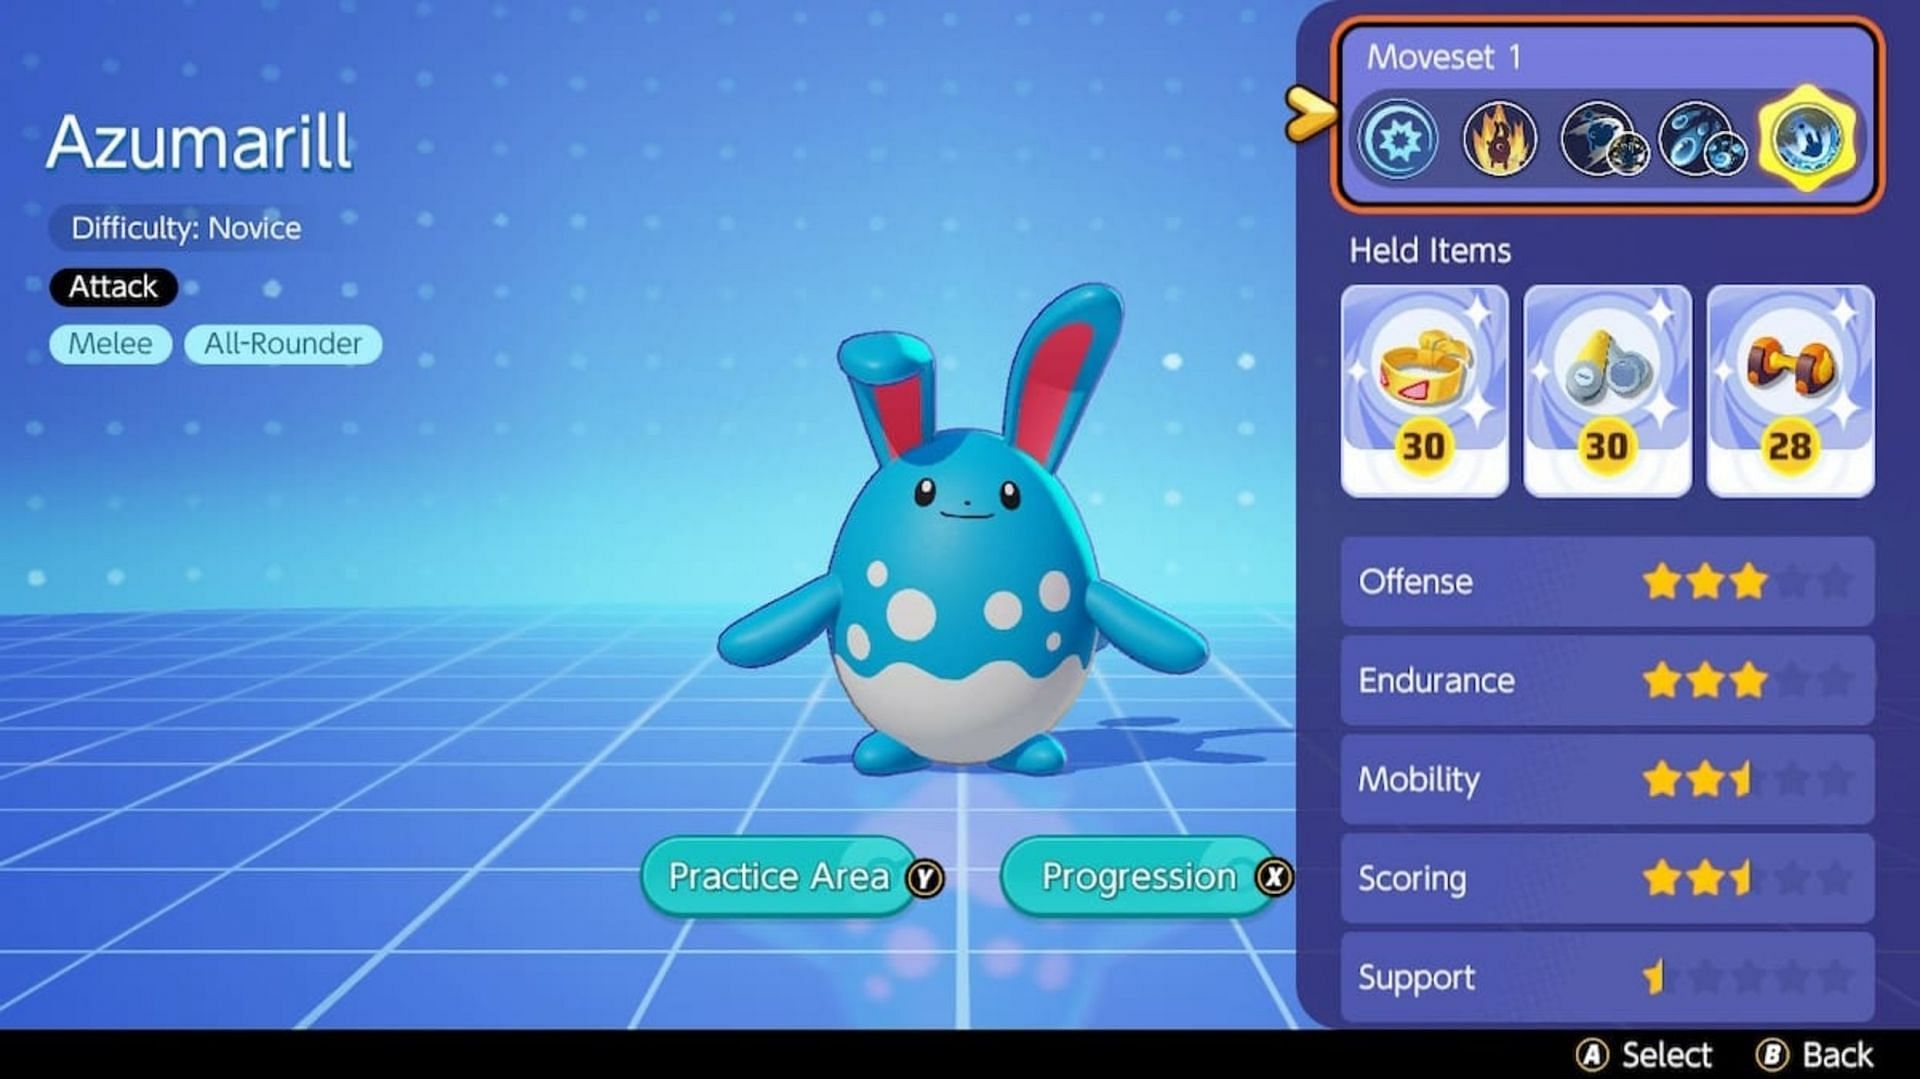 Azumarill as it appears in the Pokemon menu (Image via The Pokemon Company)